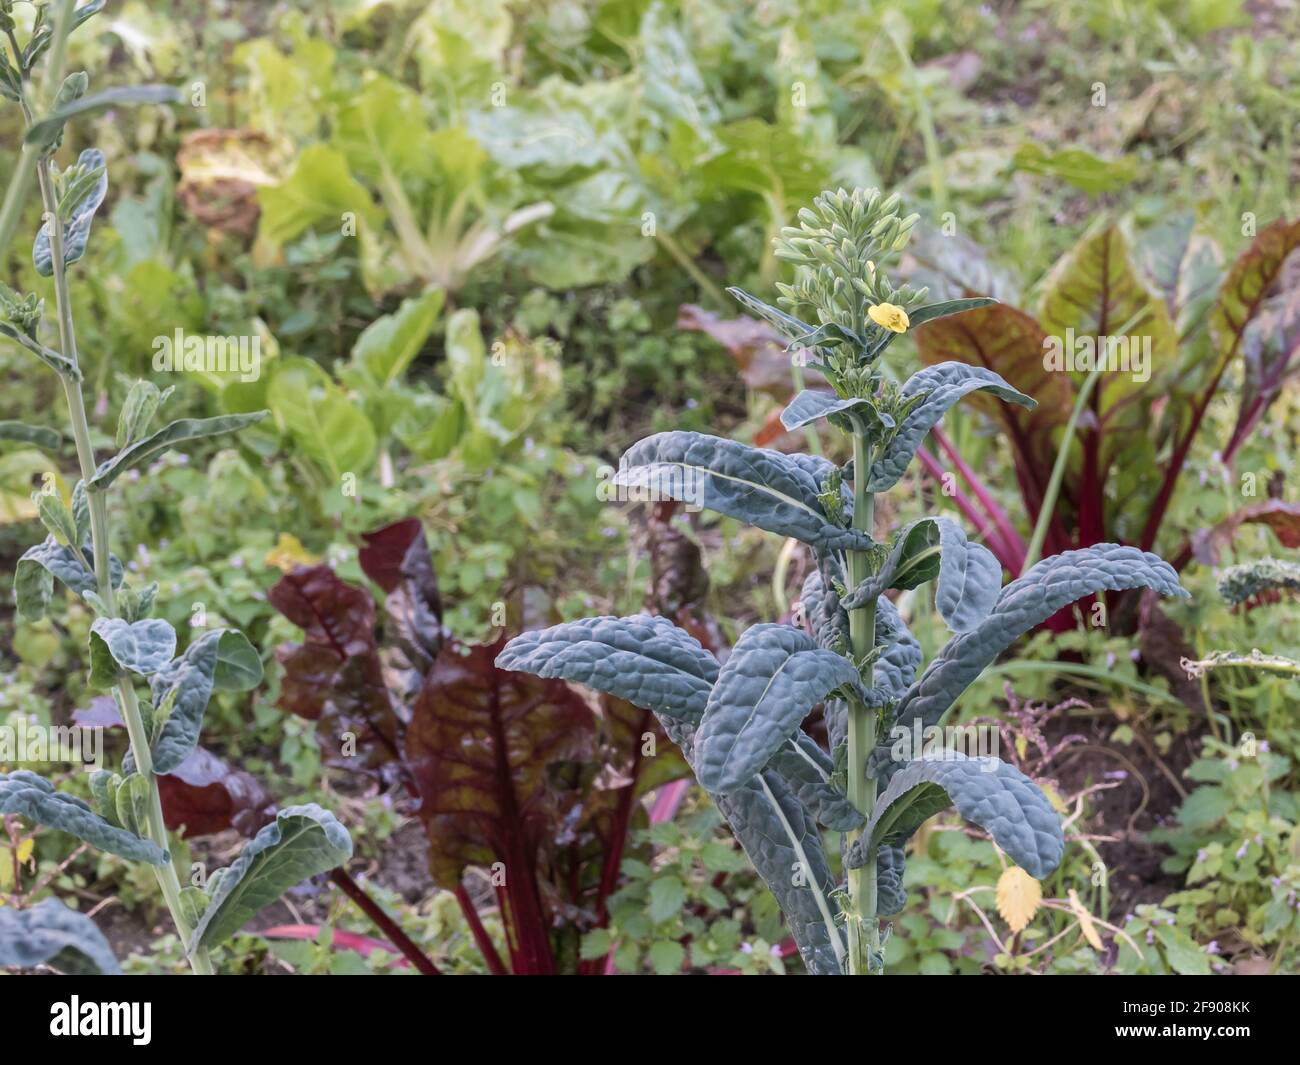 Cavolo nero plant Brassica oleracea palmifolia in a vegetable plot outdoors Stock Photo